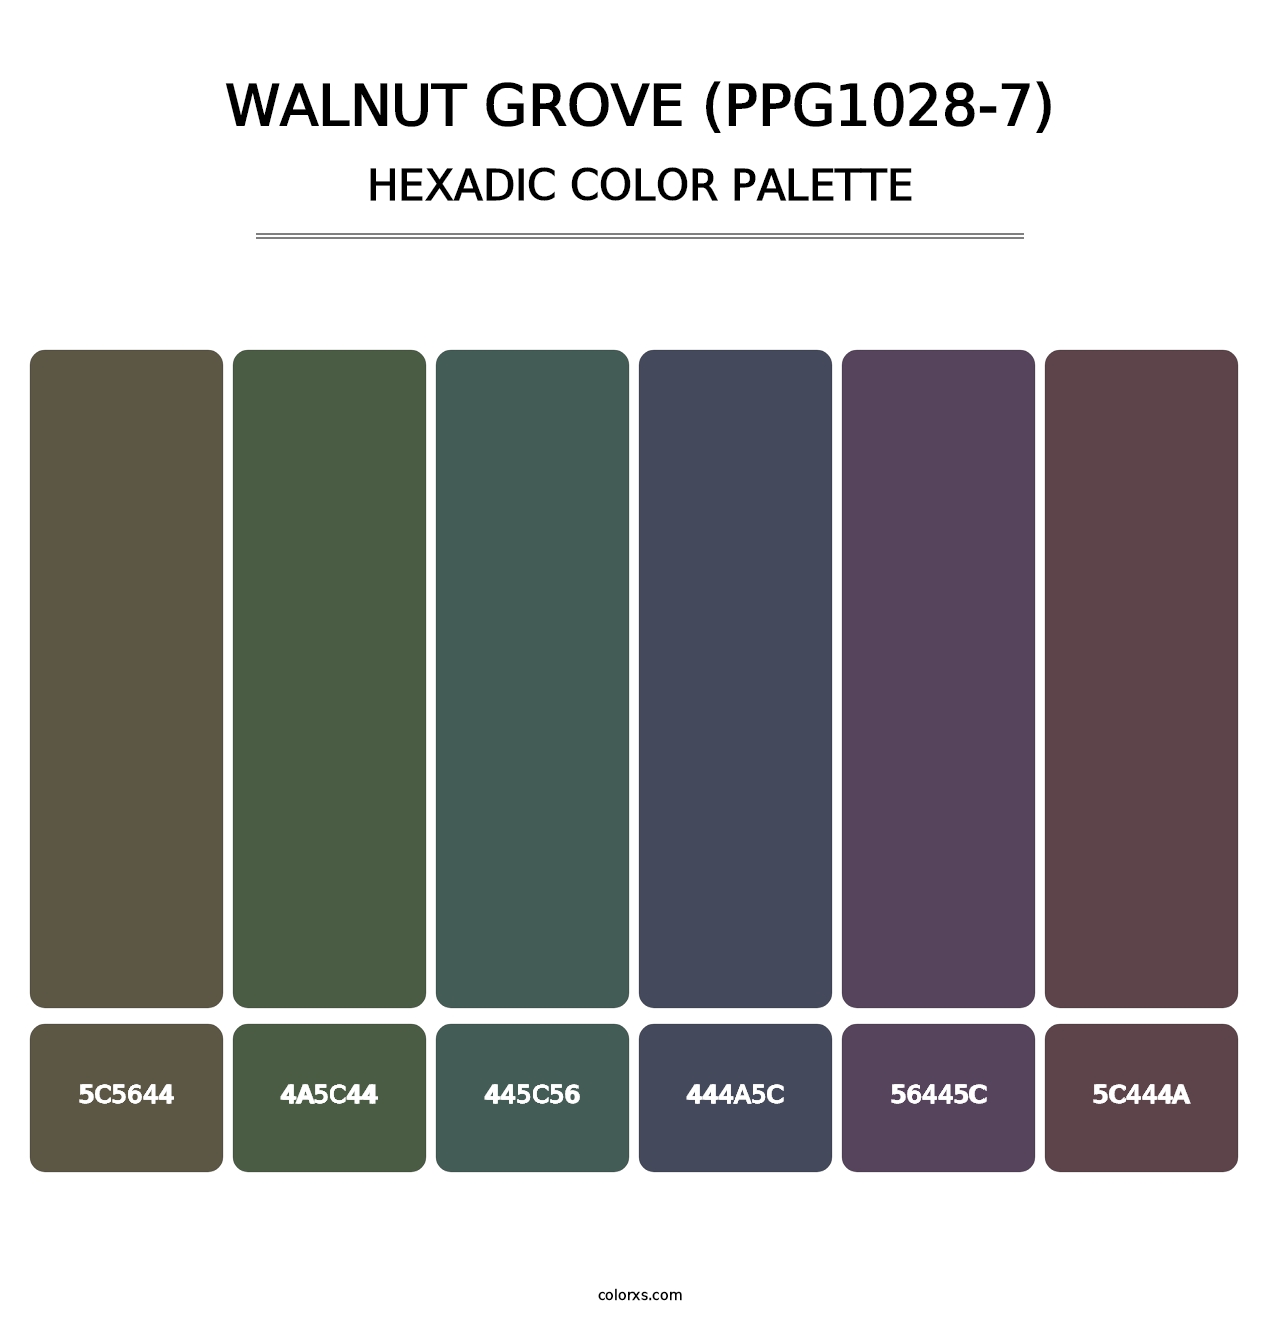 Walnut Grove (PPG1028-7) - Hexadic Color Palette